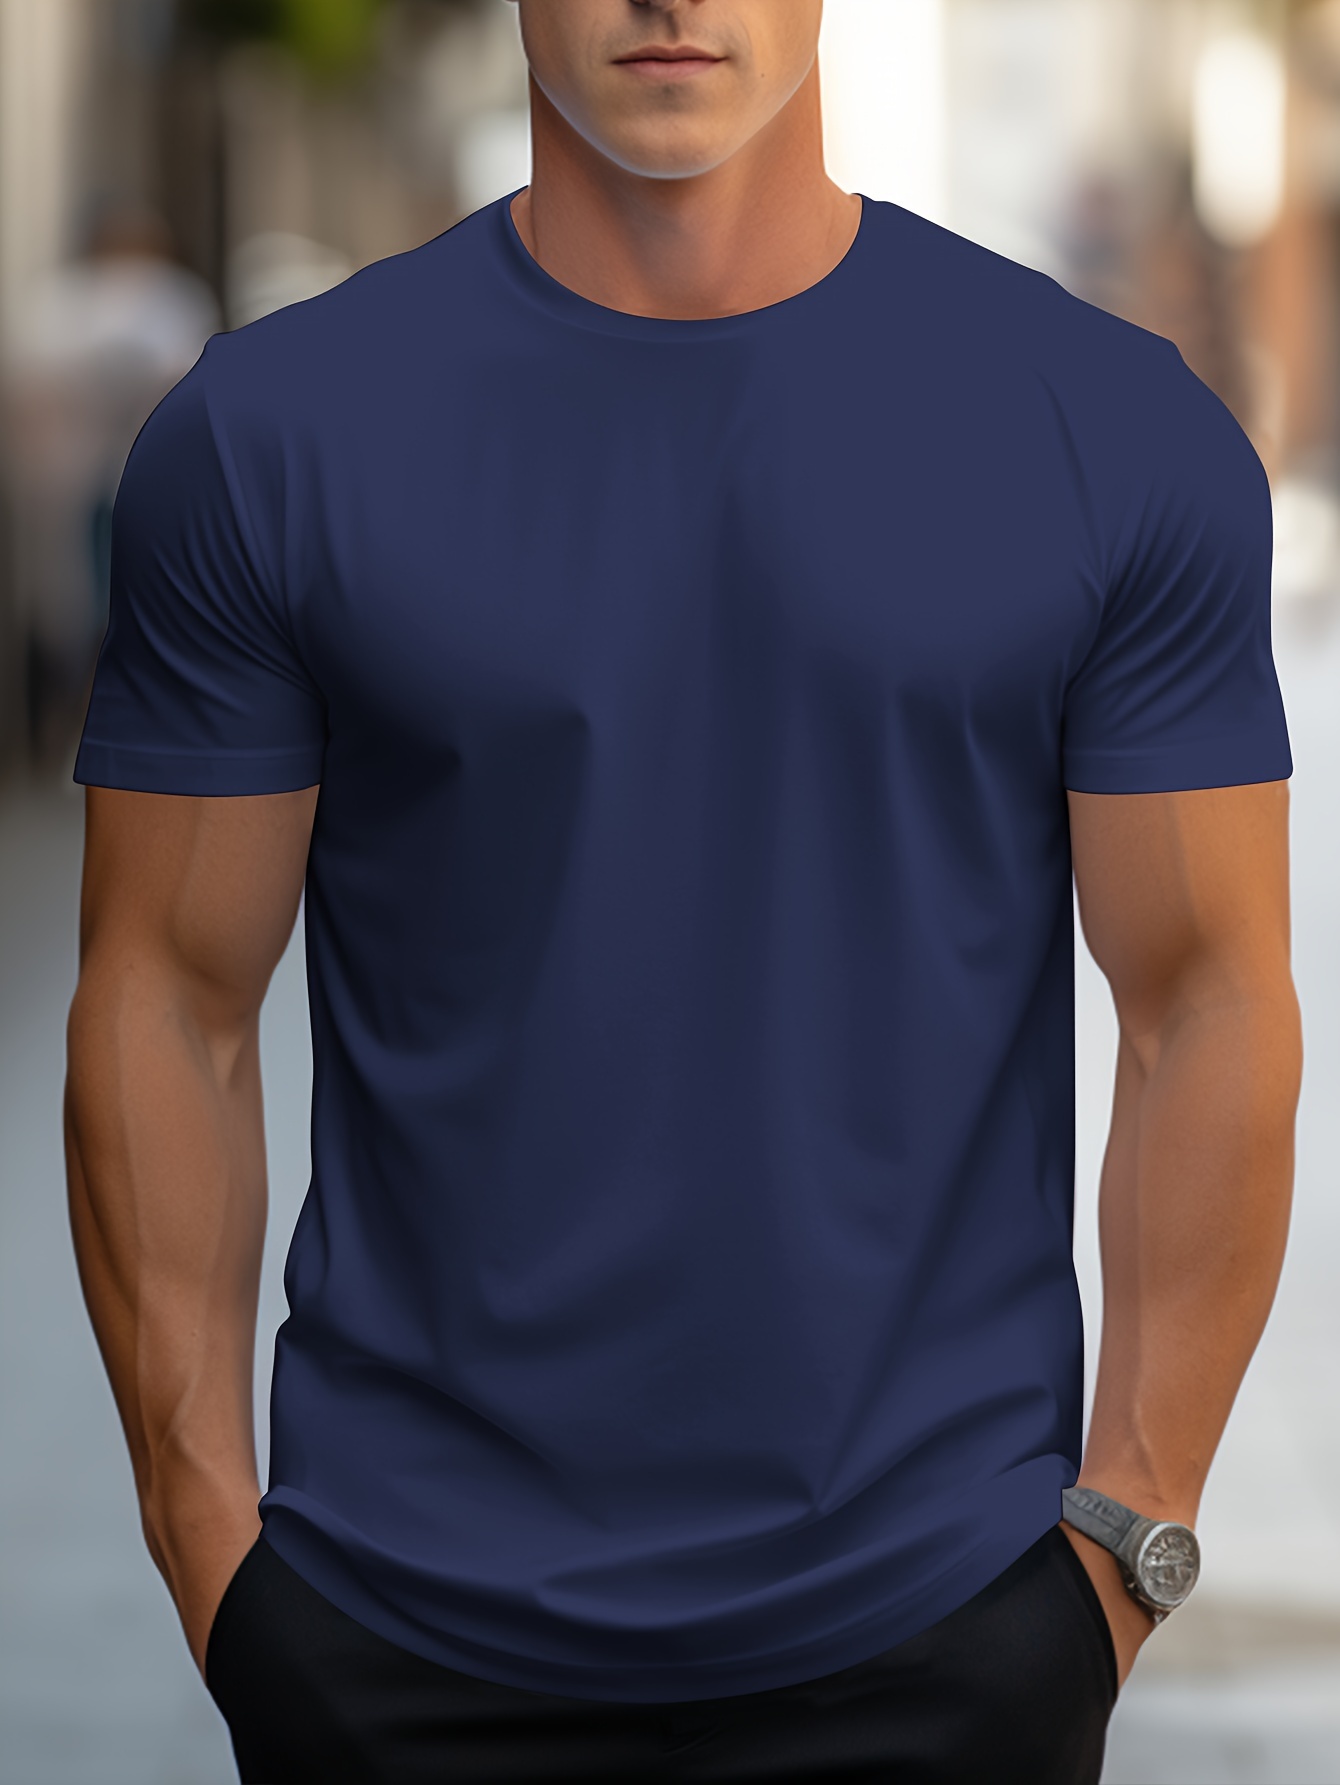 Camiseta ajustada de moda de verano de hombre para uso diario casual